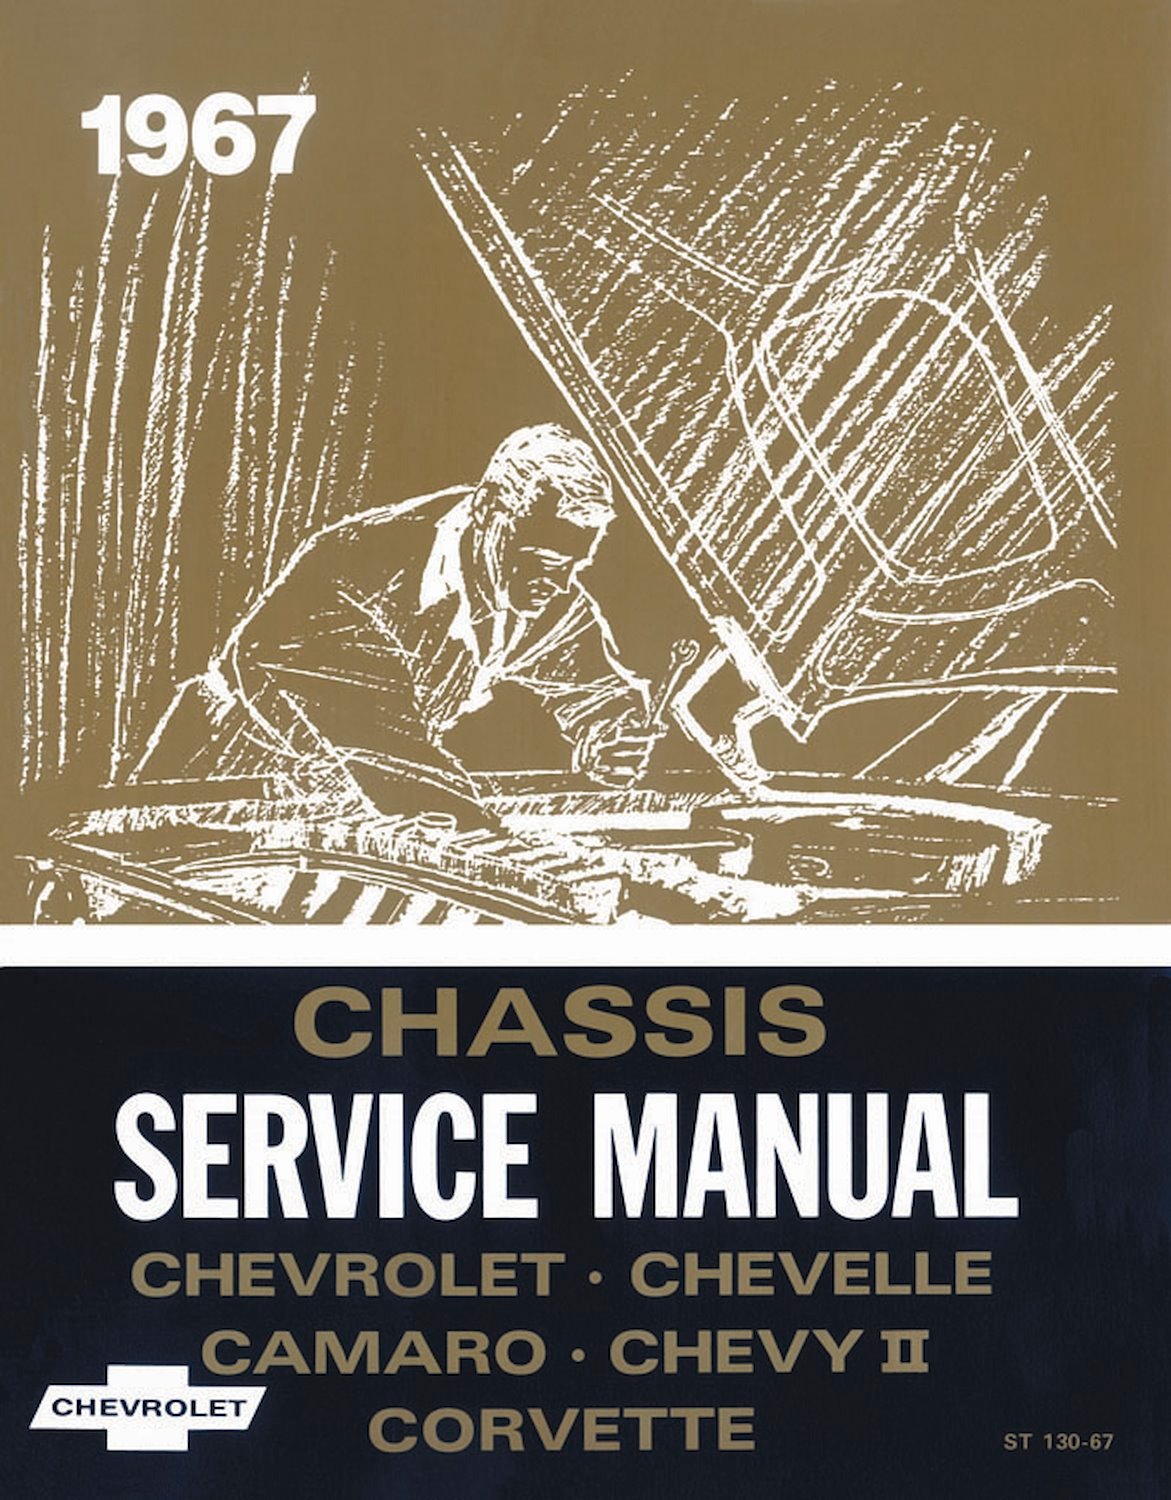 Chassis Service Manual for 1967 Chevrolet Full Size, Camaro, Chevelle, Chevy II, Corvette, El Camino